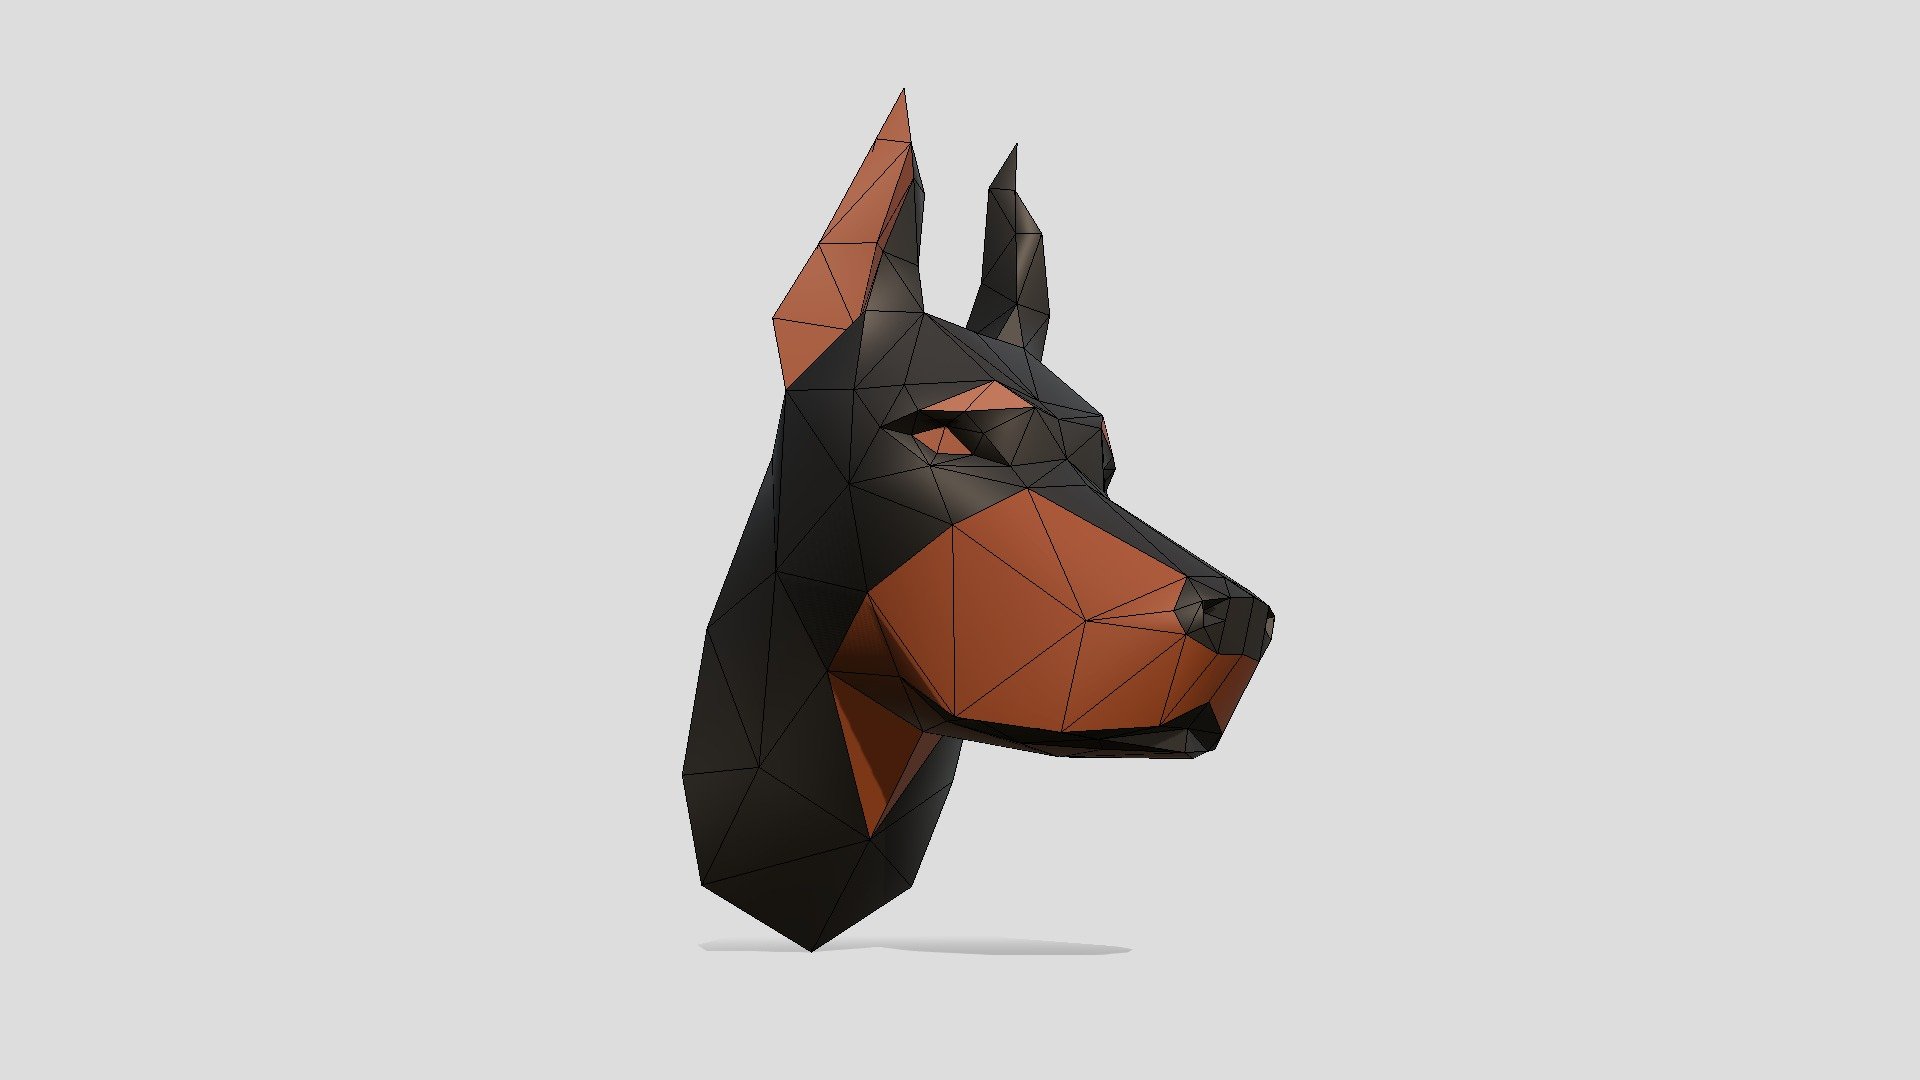 Cabeza perro estilo trofeo, modelo lowpoly.
Recomendado para pepakura, impresión 3D - Doberman - 3D model by vanneyepes6 3d model